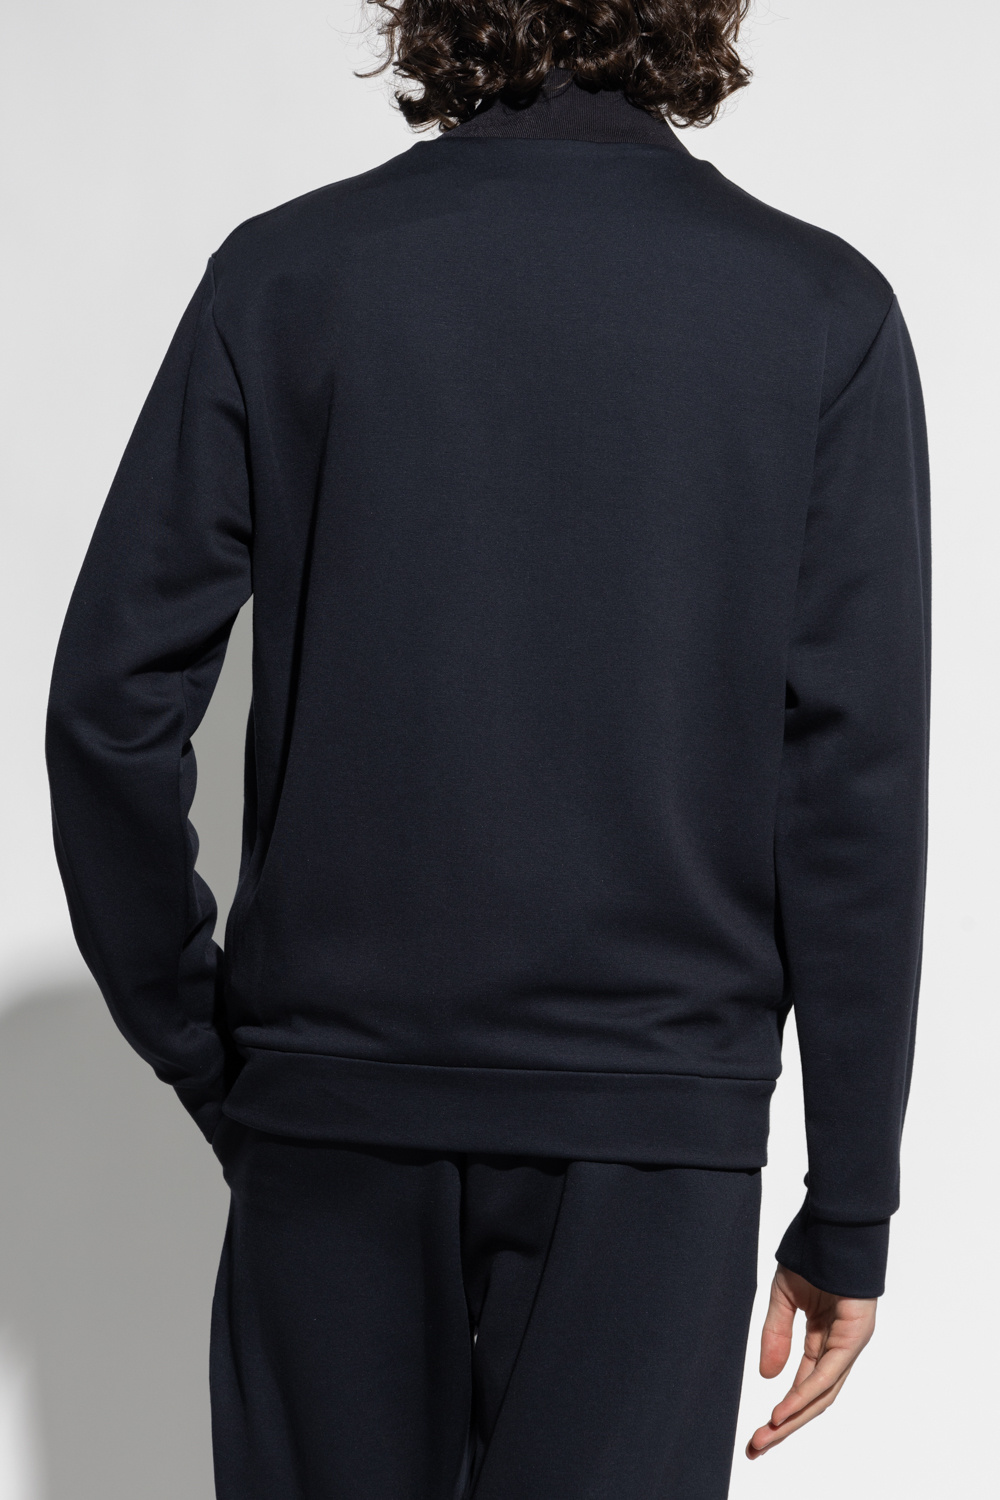 Giorgio armani Blanket Sweatshirt with logo